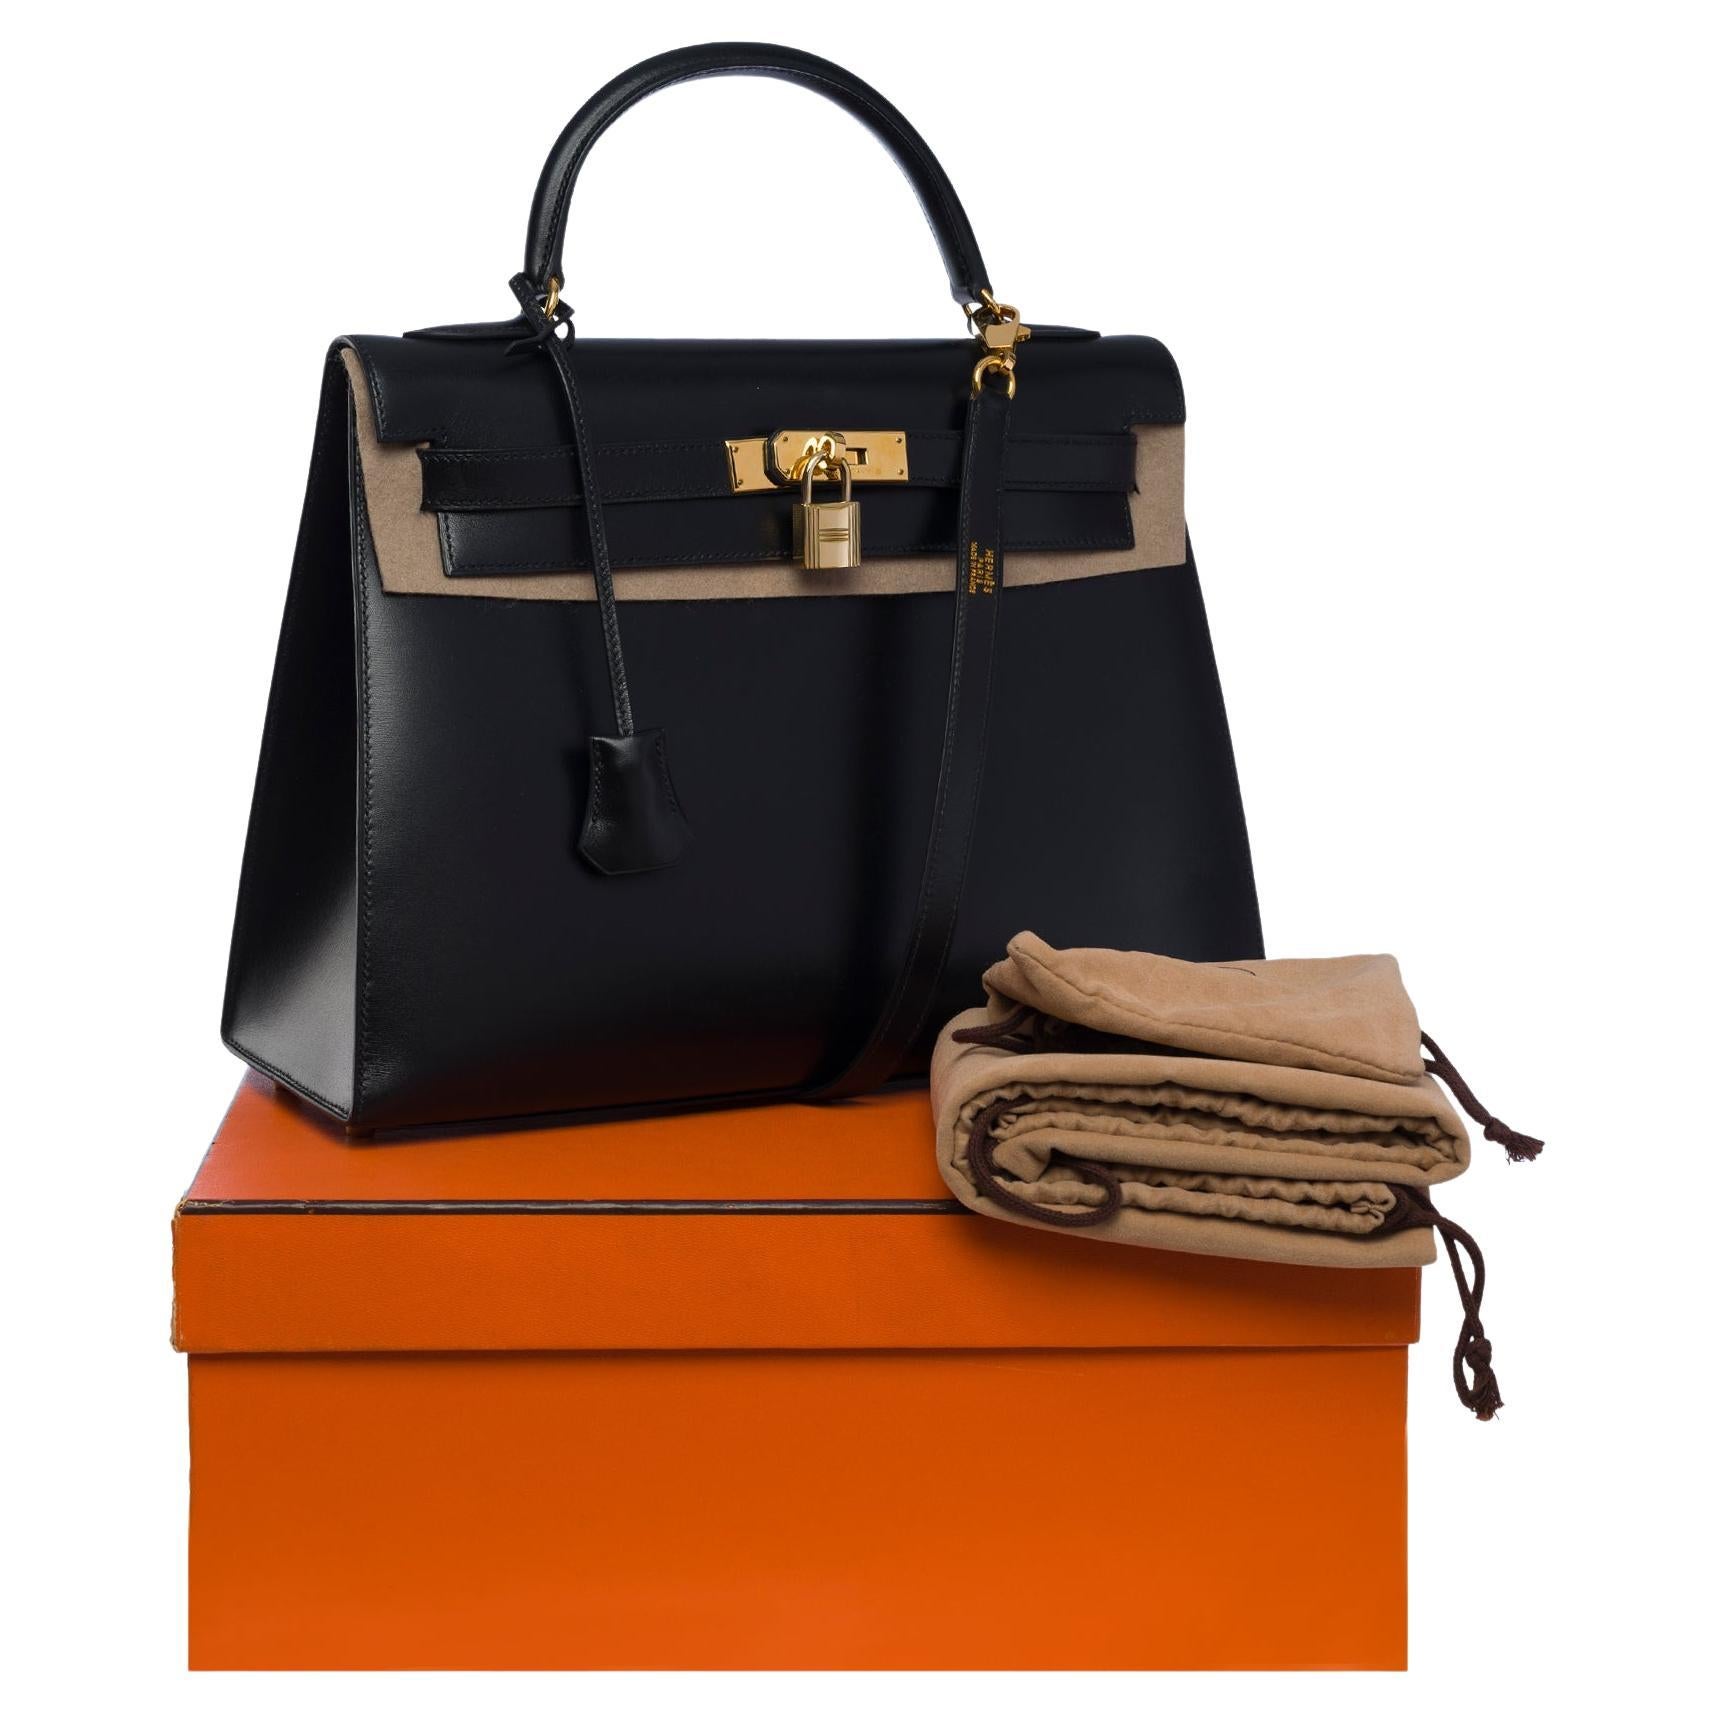 Stunning Hermès Kelly 32 sellier handbag strap in Box calf leather, GHW For Sale